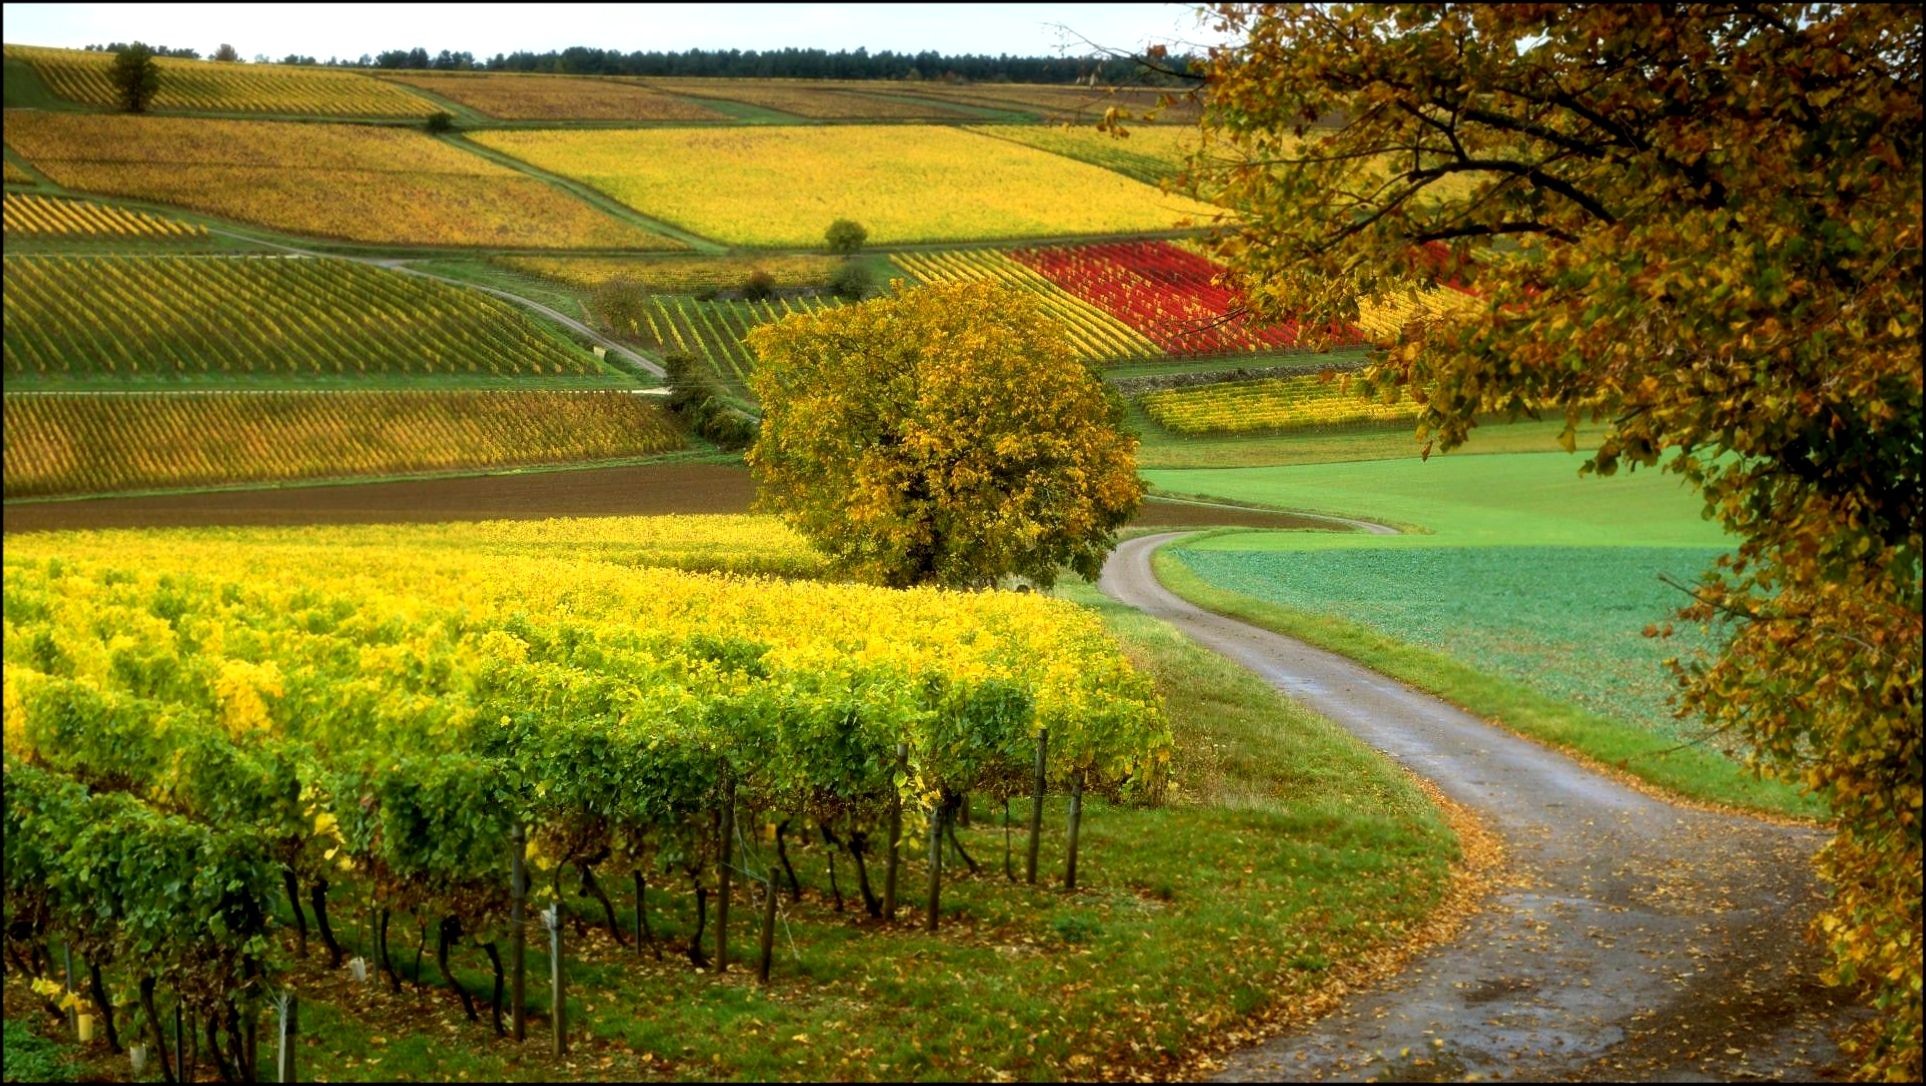 nachural hd wallpaper,natural landscape,nature,field,yellow,rural area